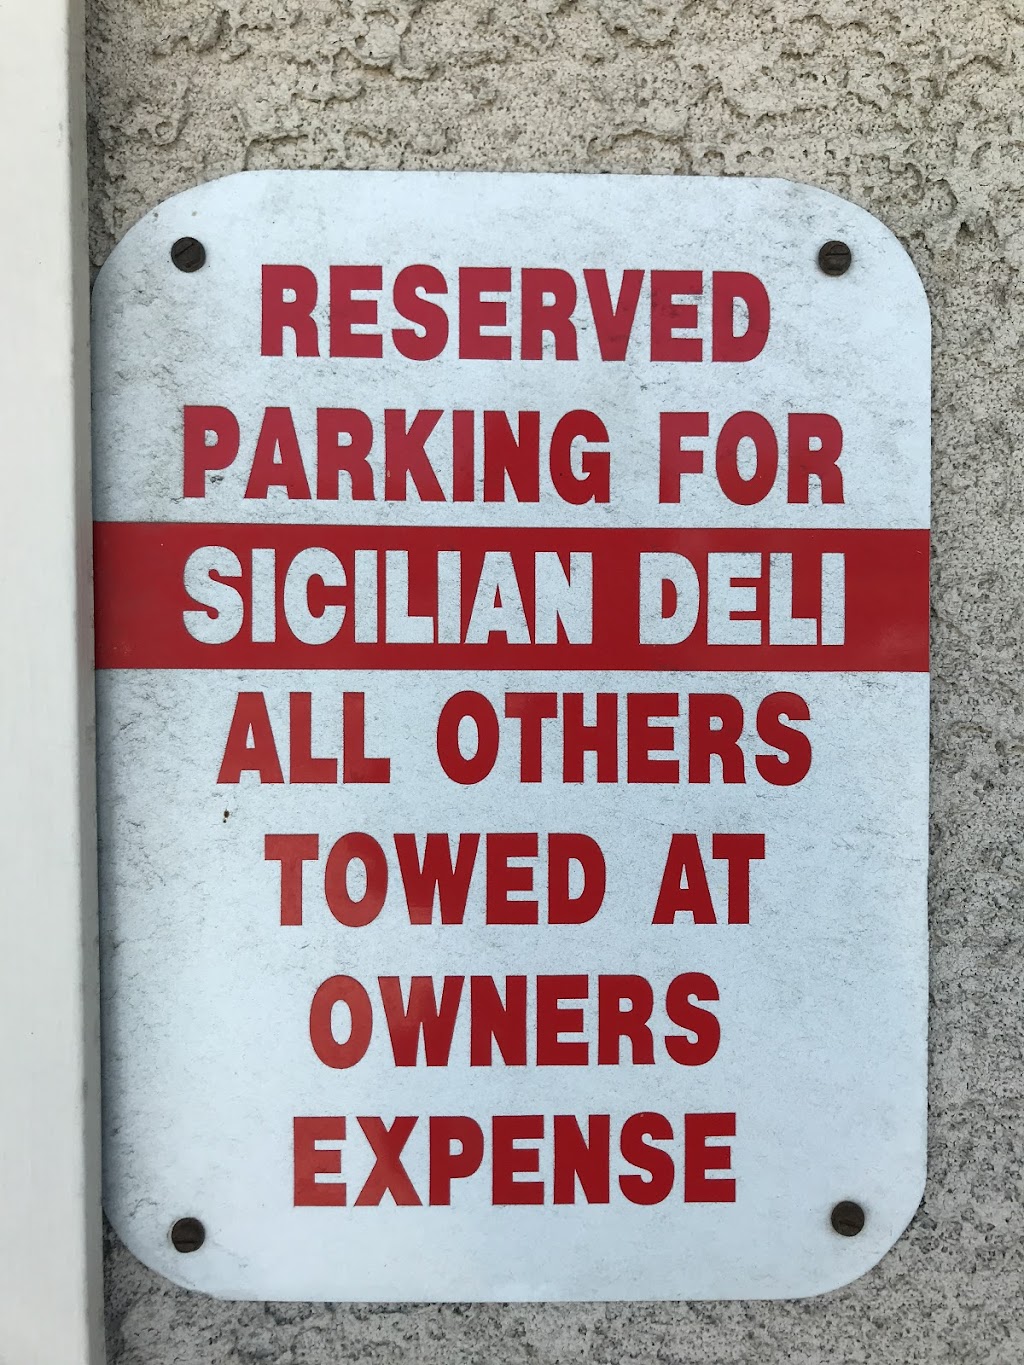 The Sicilian Deli | 735 Mantua Pike, Woodbury, NJ 08096 | Phone: (856) 251-0556